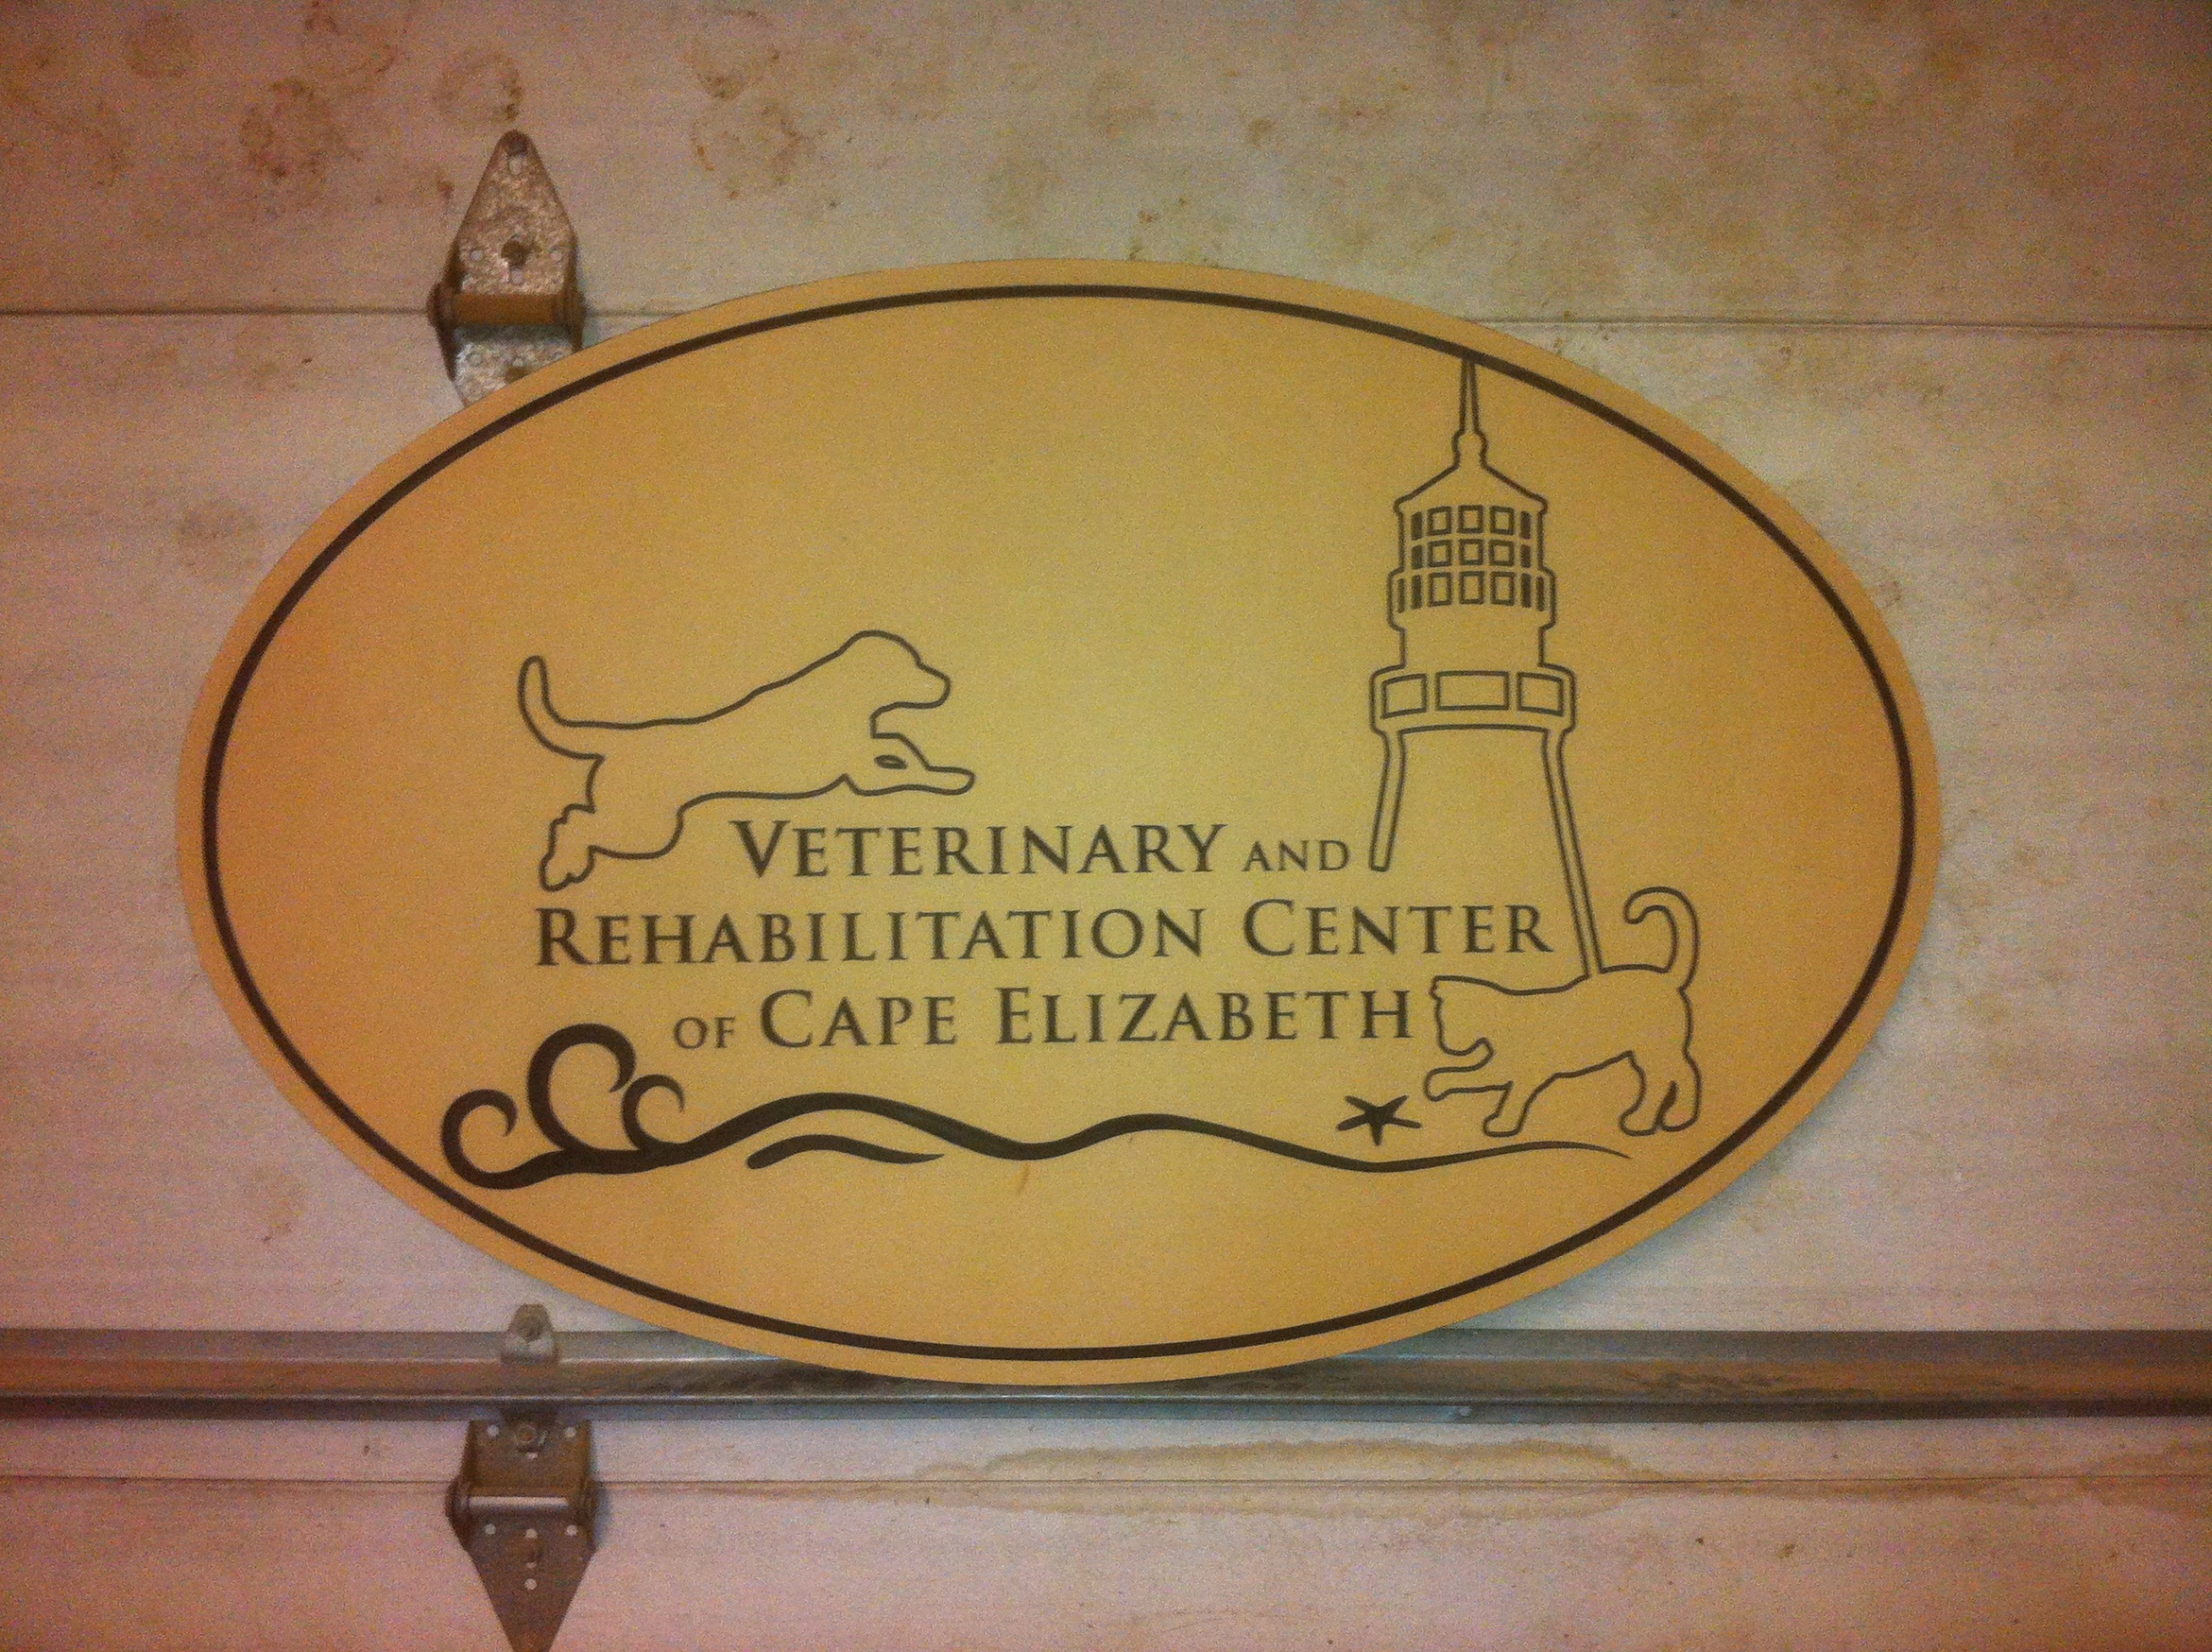 Veterinary and Rehabilition Center of Cape Elizabeth